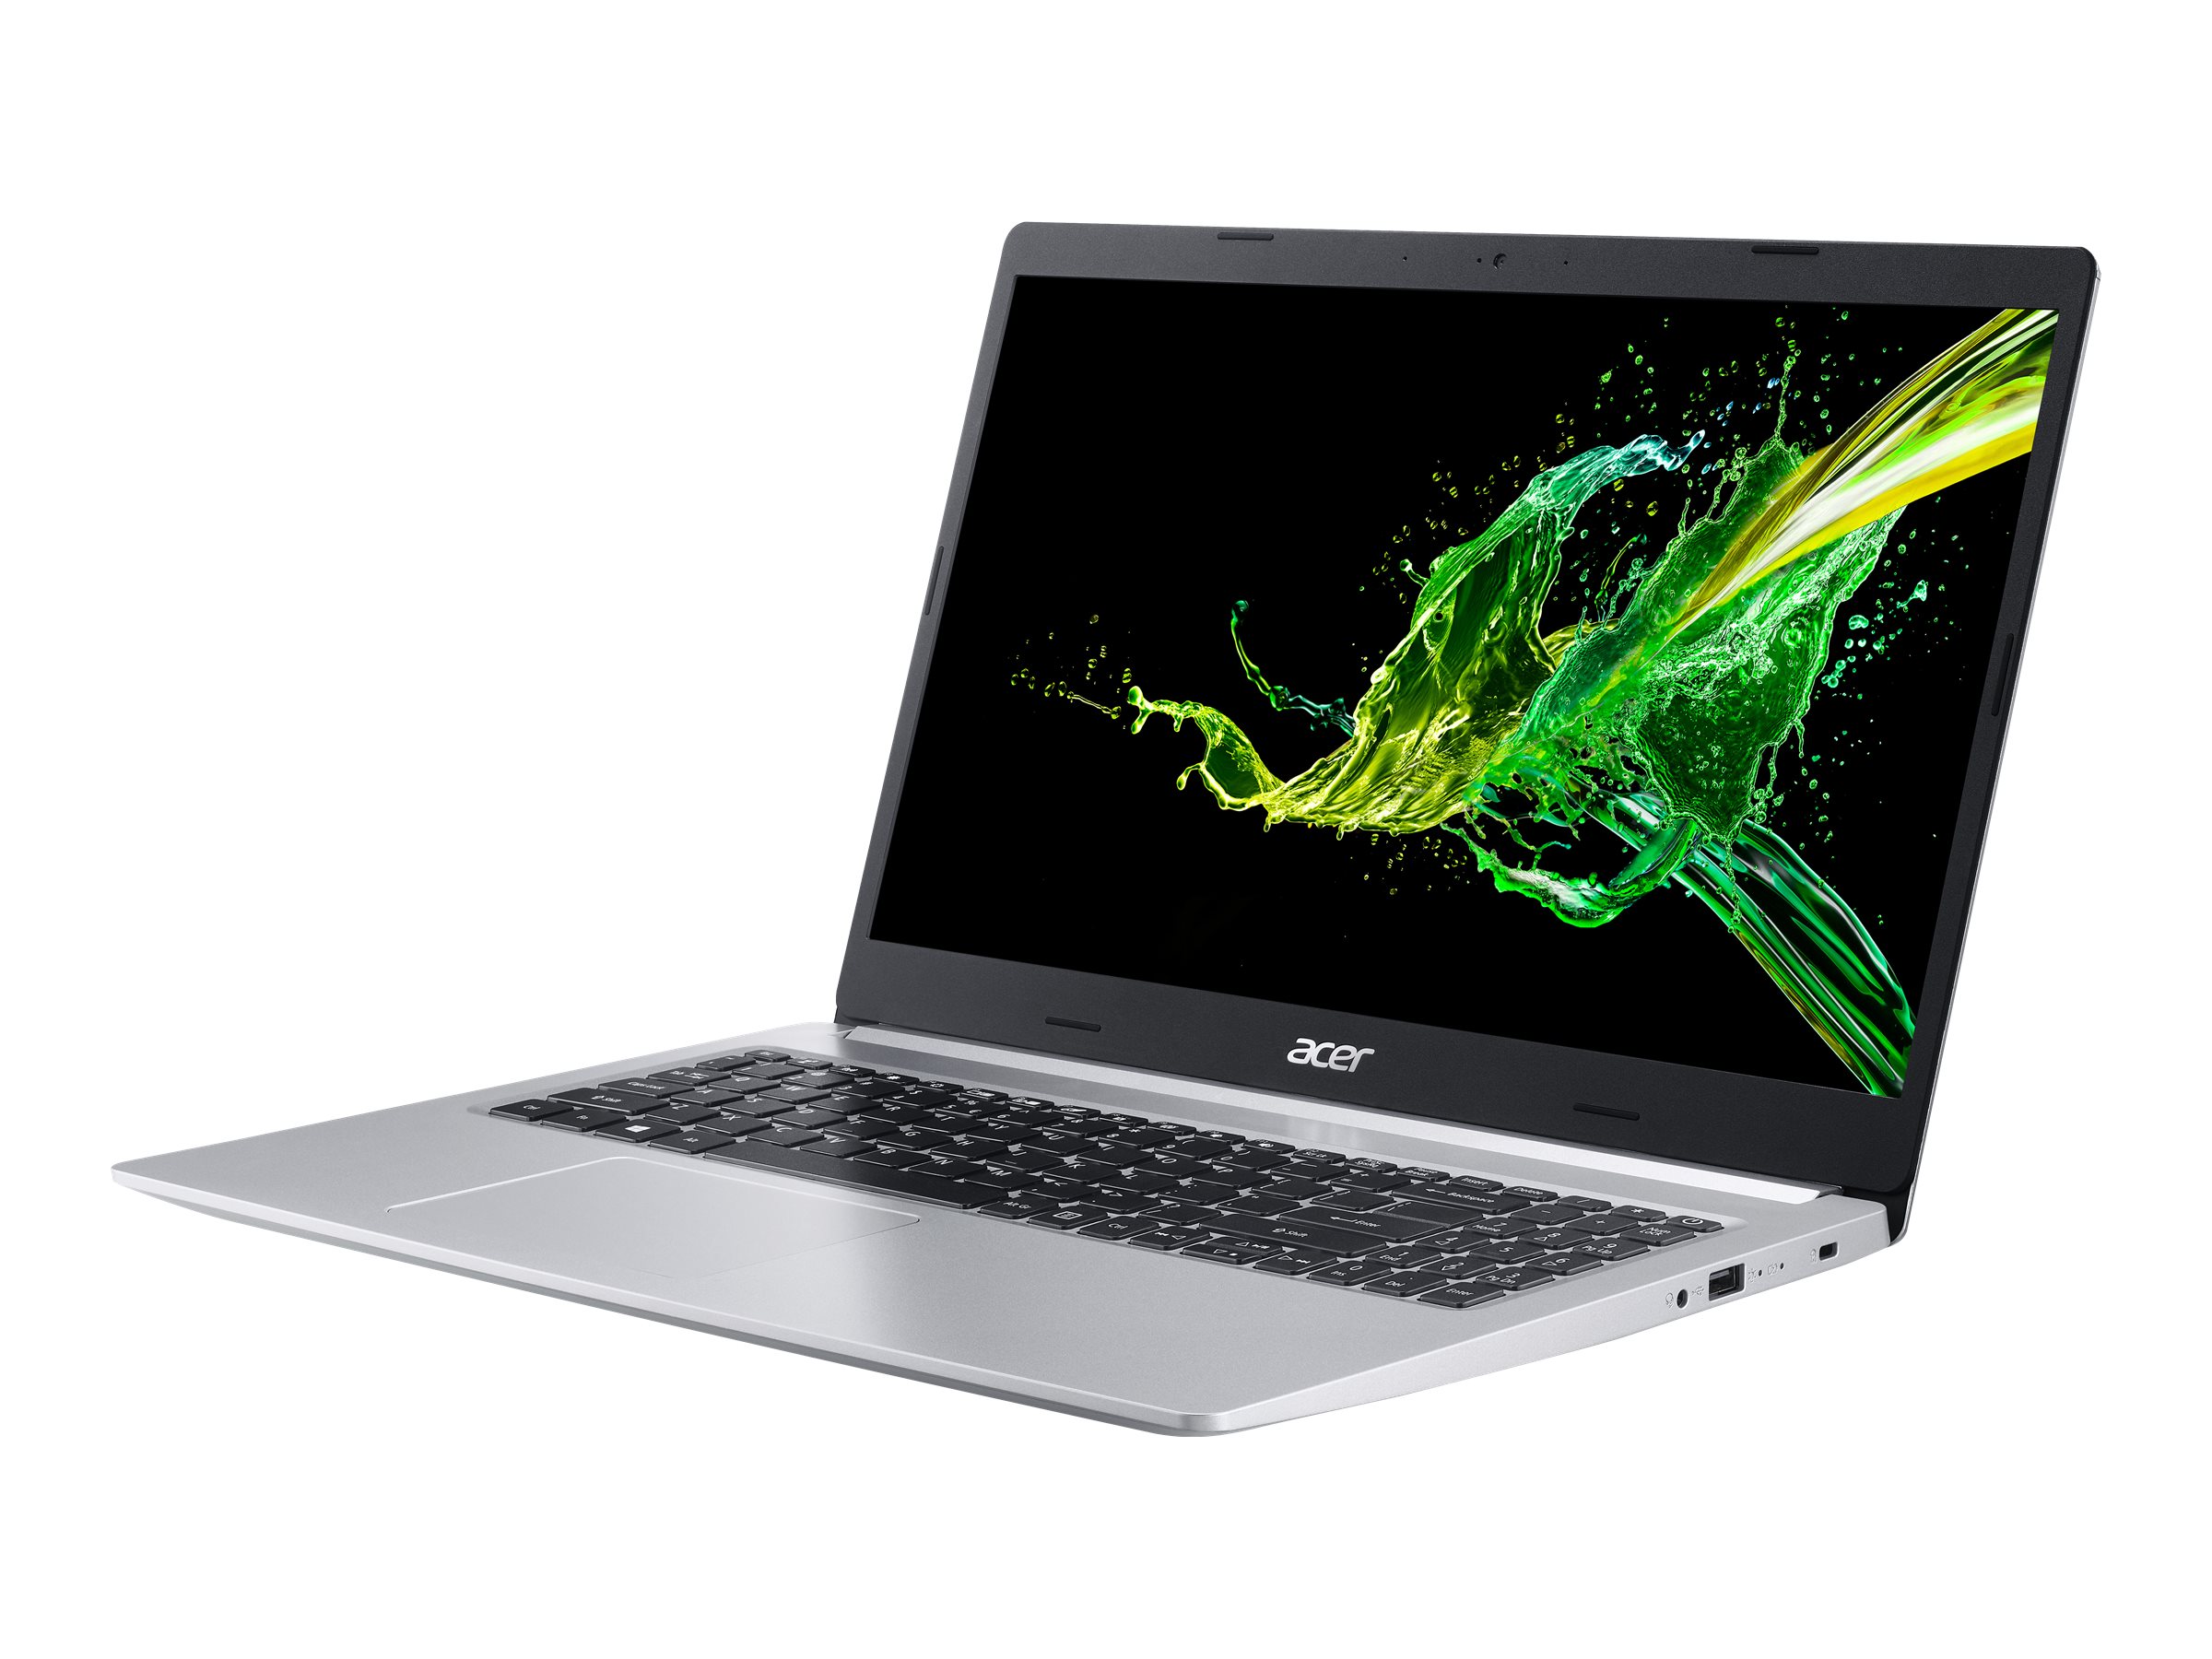 Acer Aspire 5 A515-54-37U3 - Intel Core i3 10110U / 2.1 GHz - Windows 10 Home 64-bit in S mode - UHD Graphics - 4 GB RAM - 128 GB SSD NVMe - 15.6" IPS 1920 x 1080 (Full HD) - Wi-Fi 5 - pure silver - kbd: US Intl - image 1 of 7